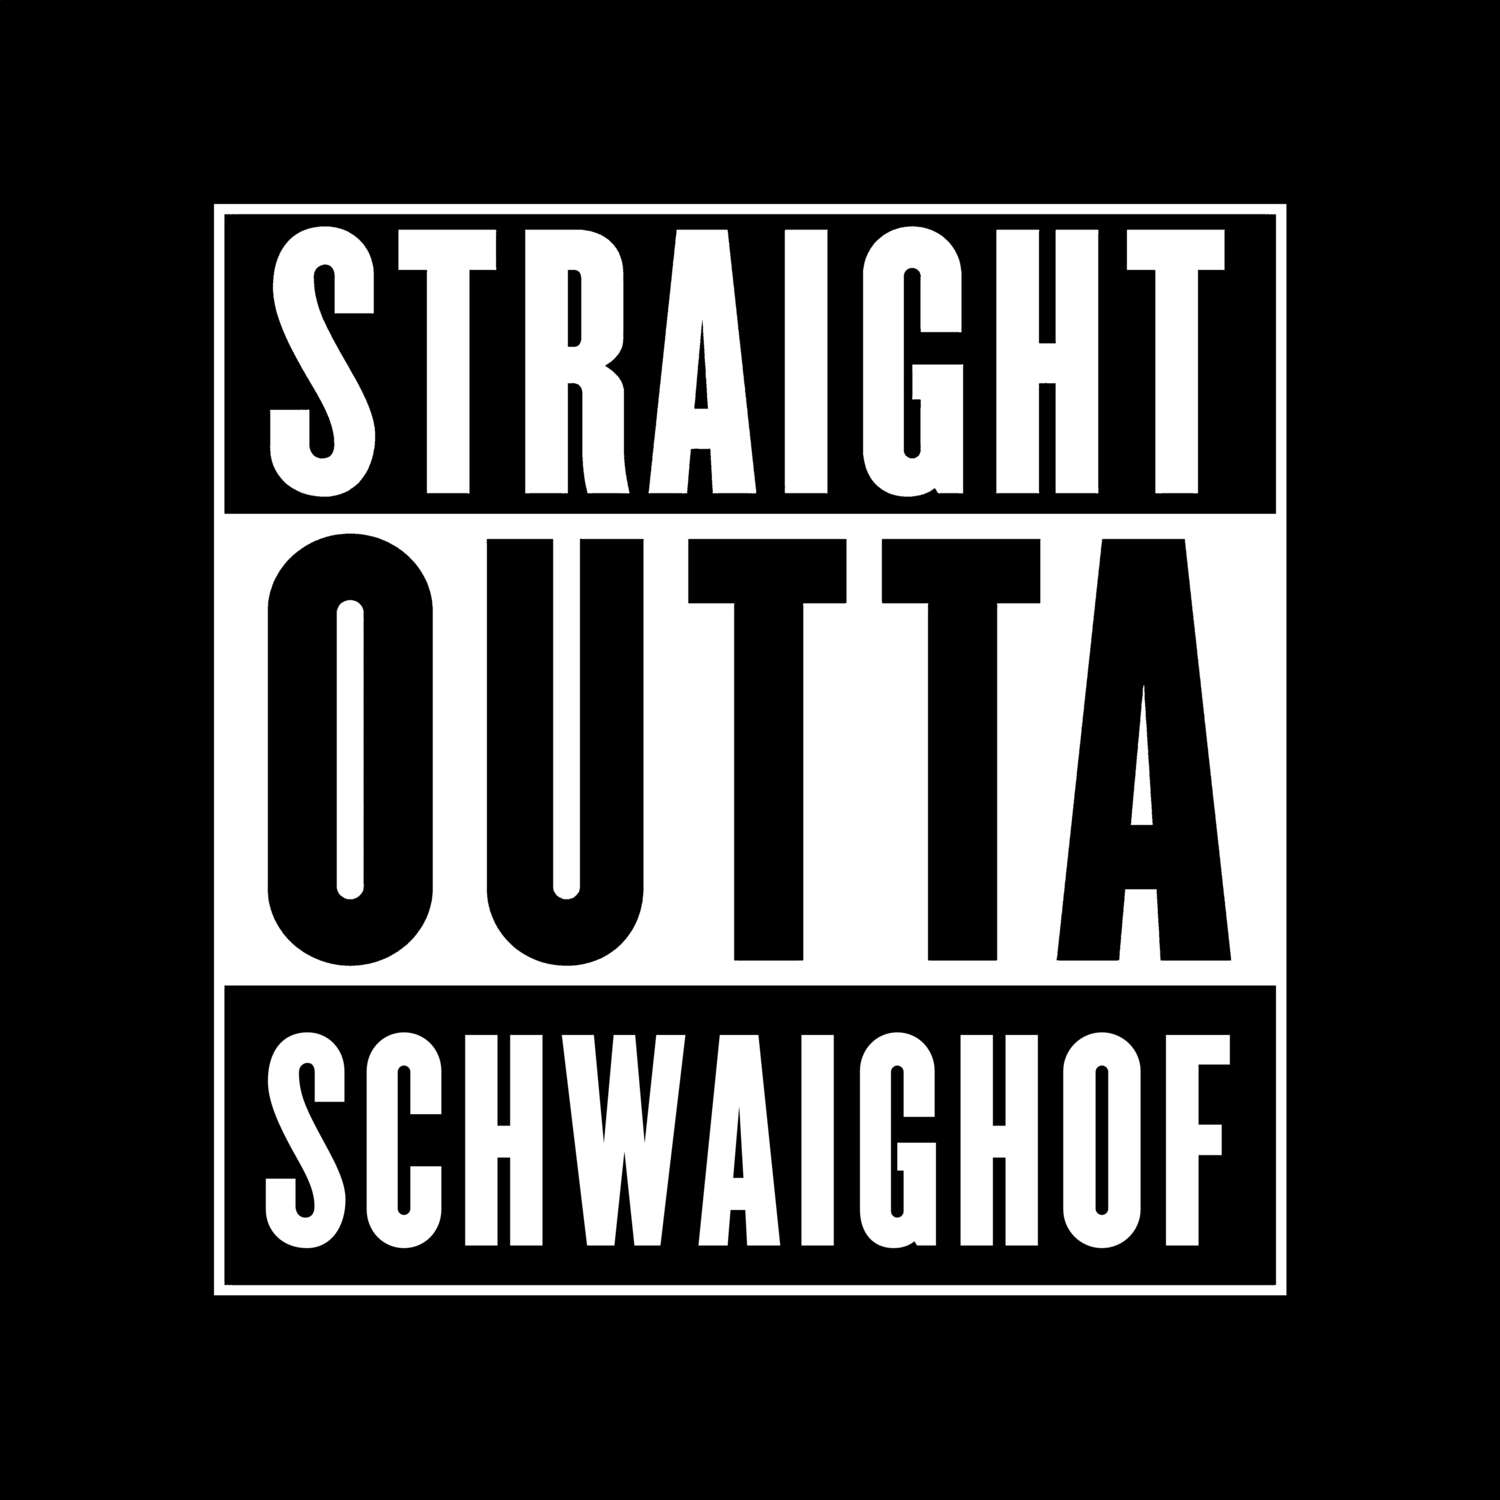 Schwaighof T-Shirt »Straight Outta«